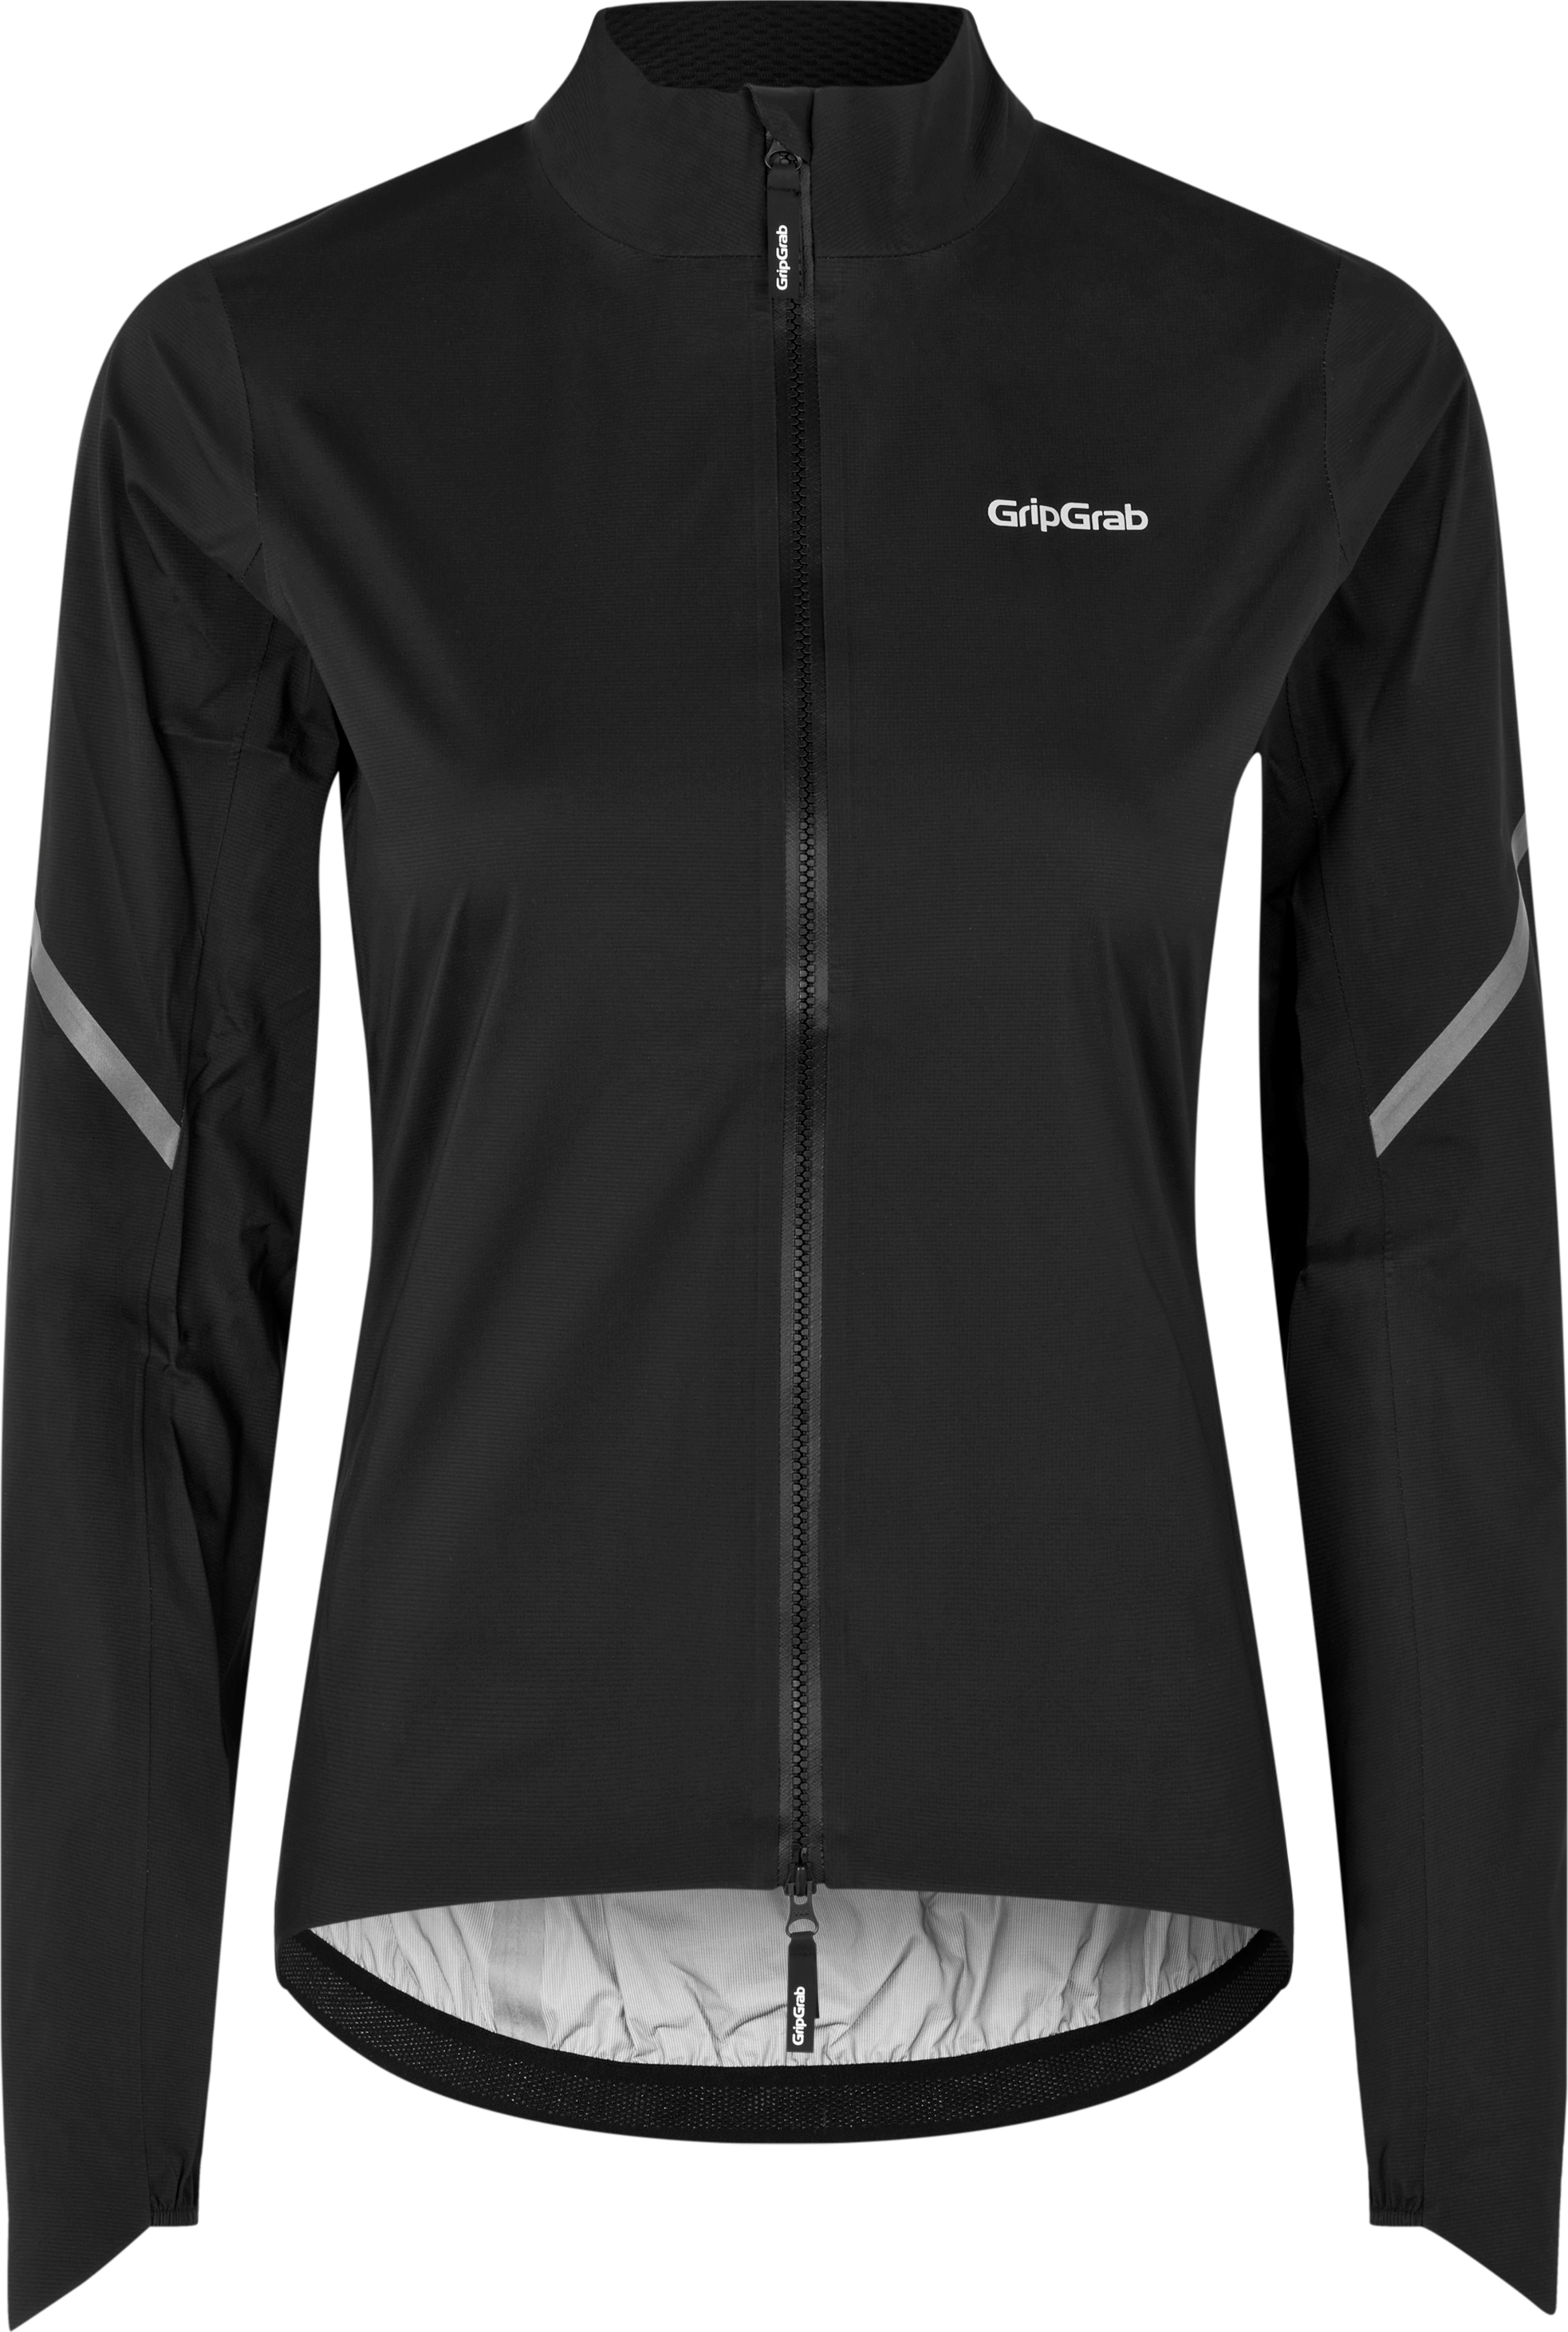 Gripgrab Women’s RainMaster Waterproof Lightweight Jacket Black